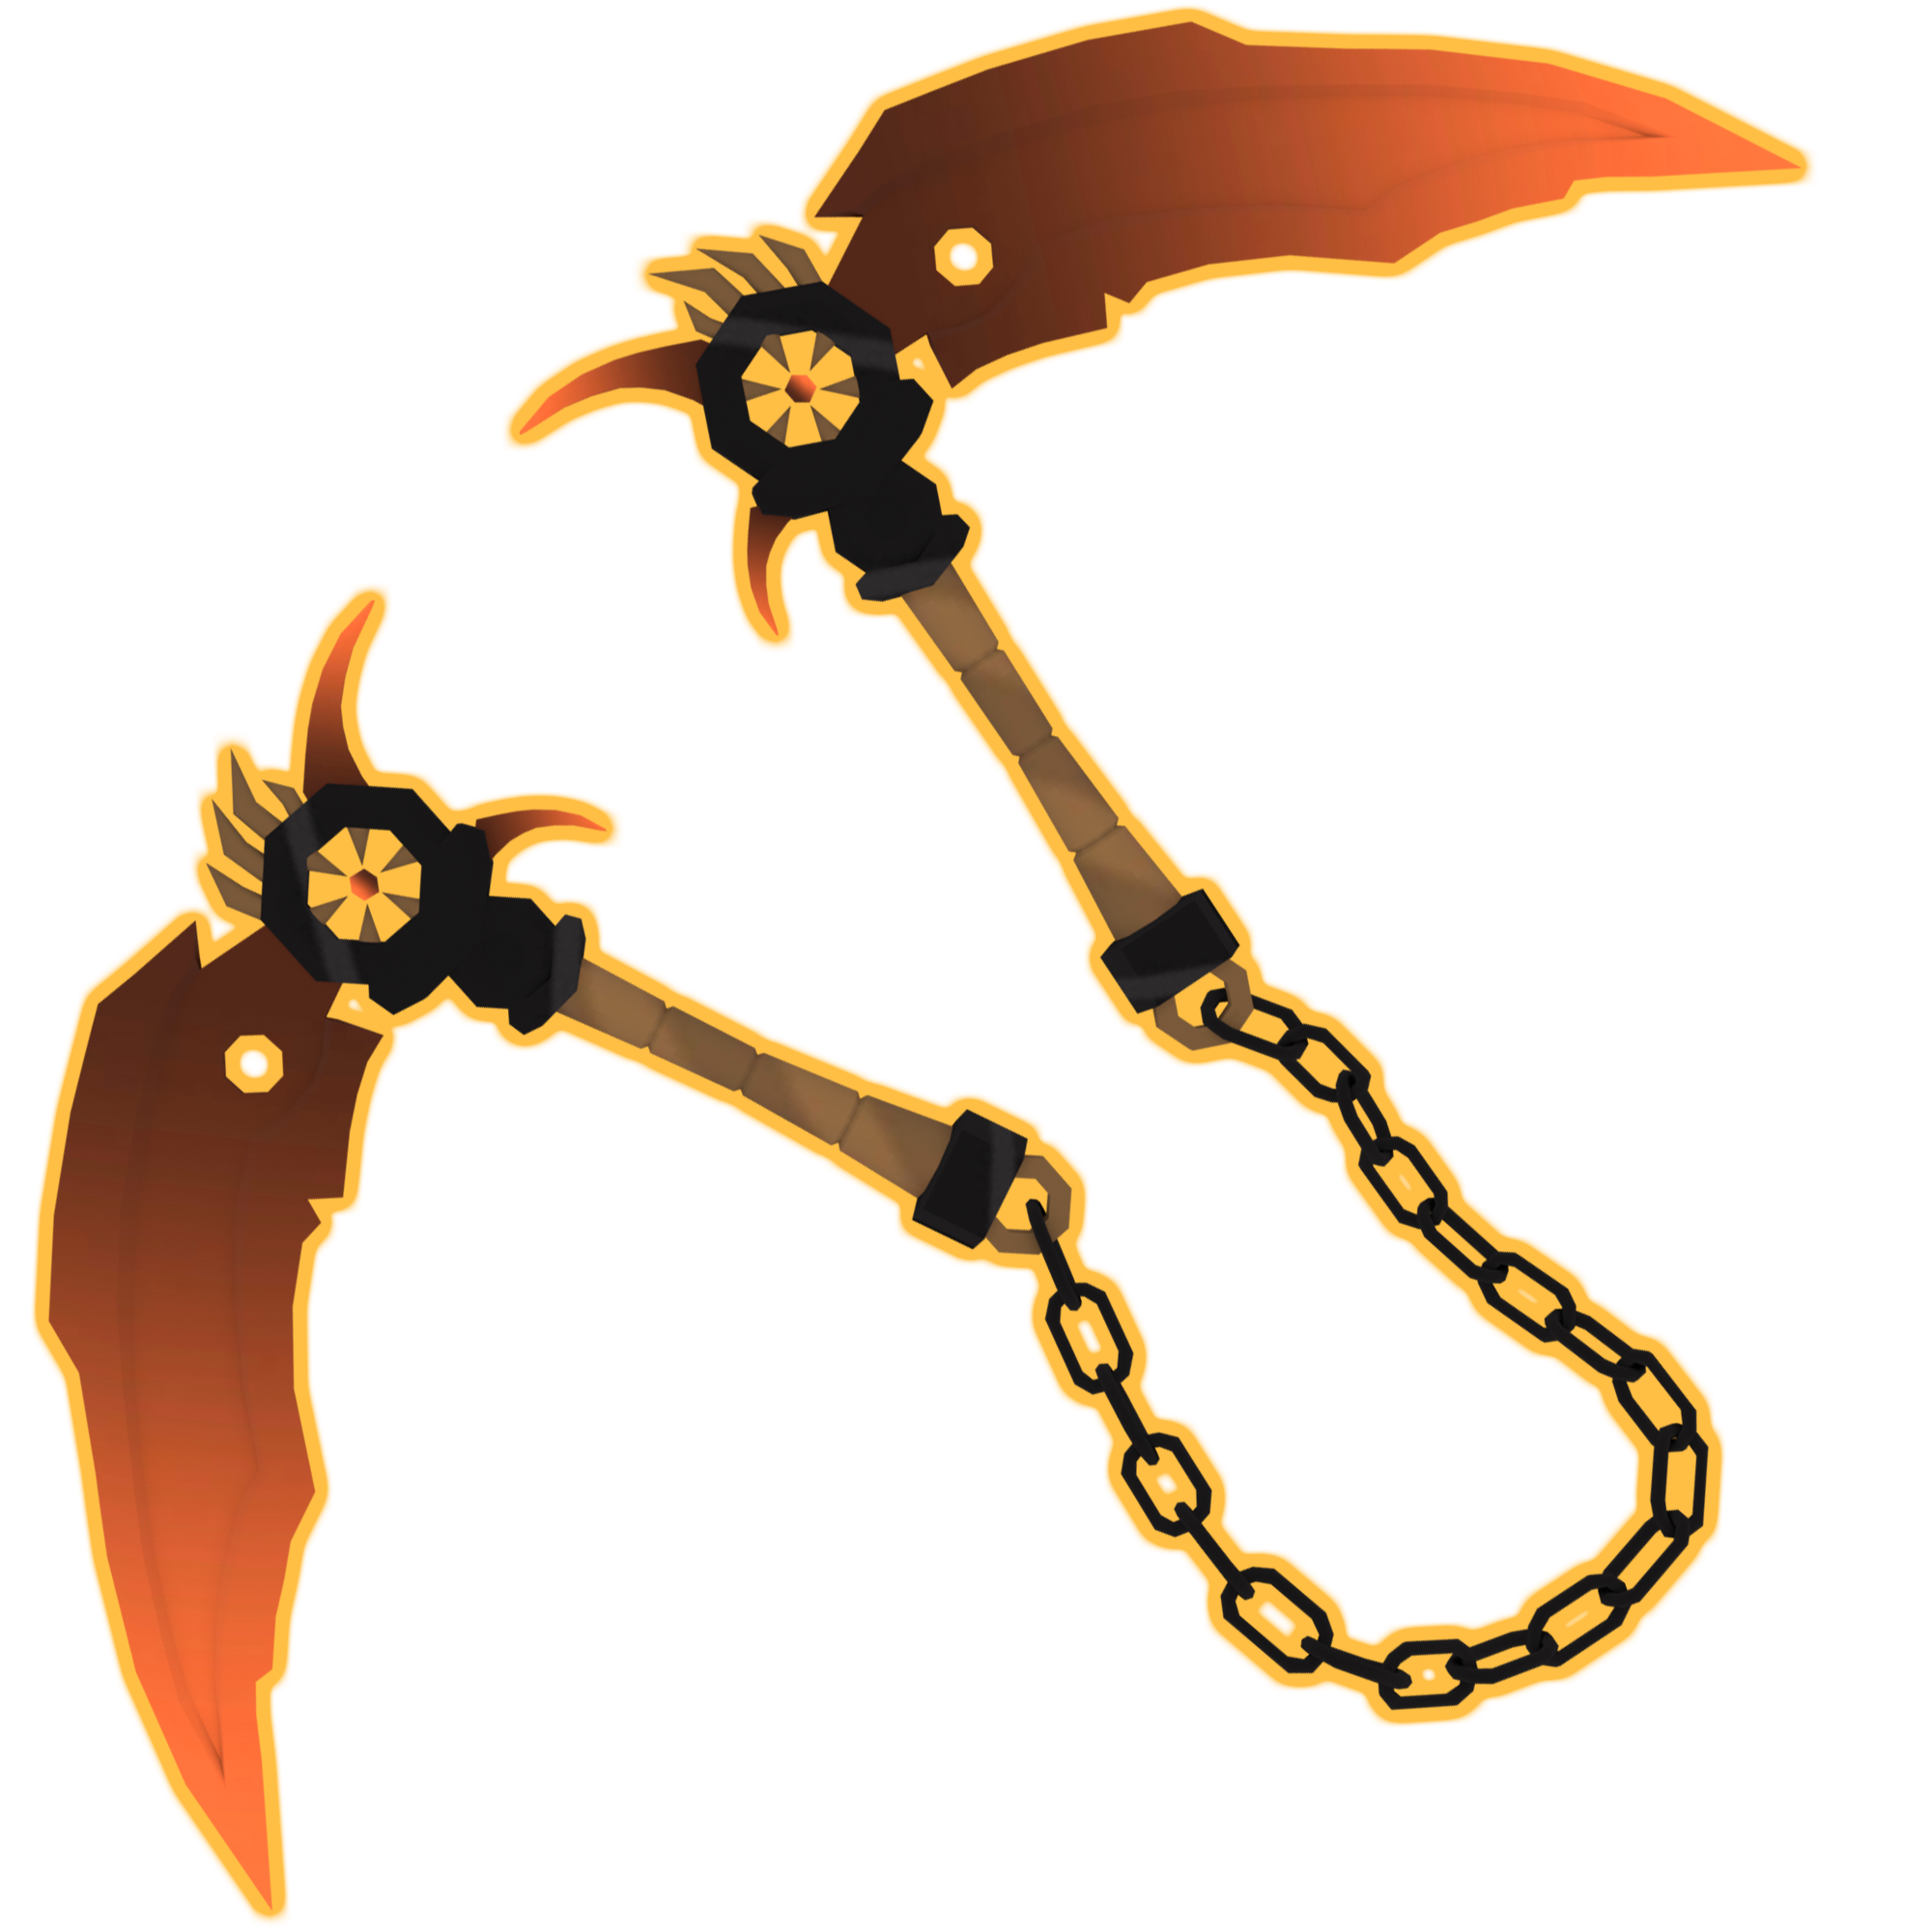 CODE] Chain Scythe Weapon Showcase